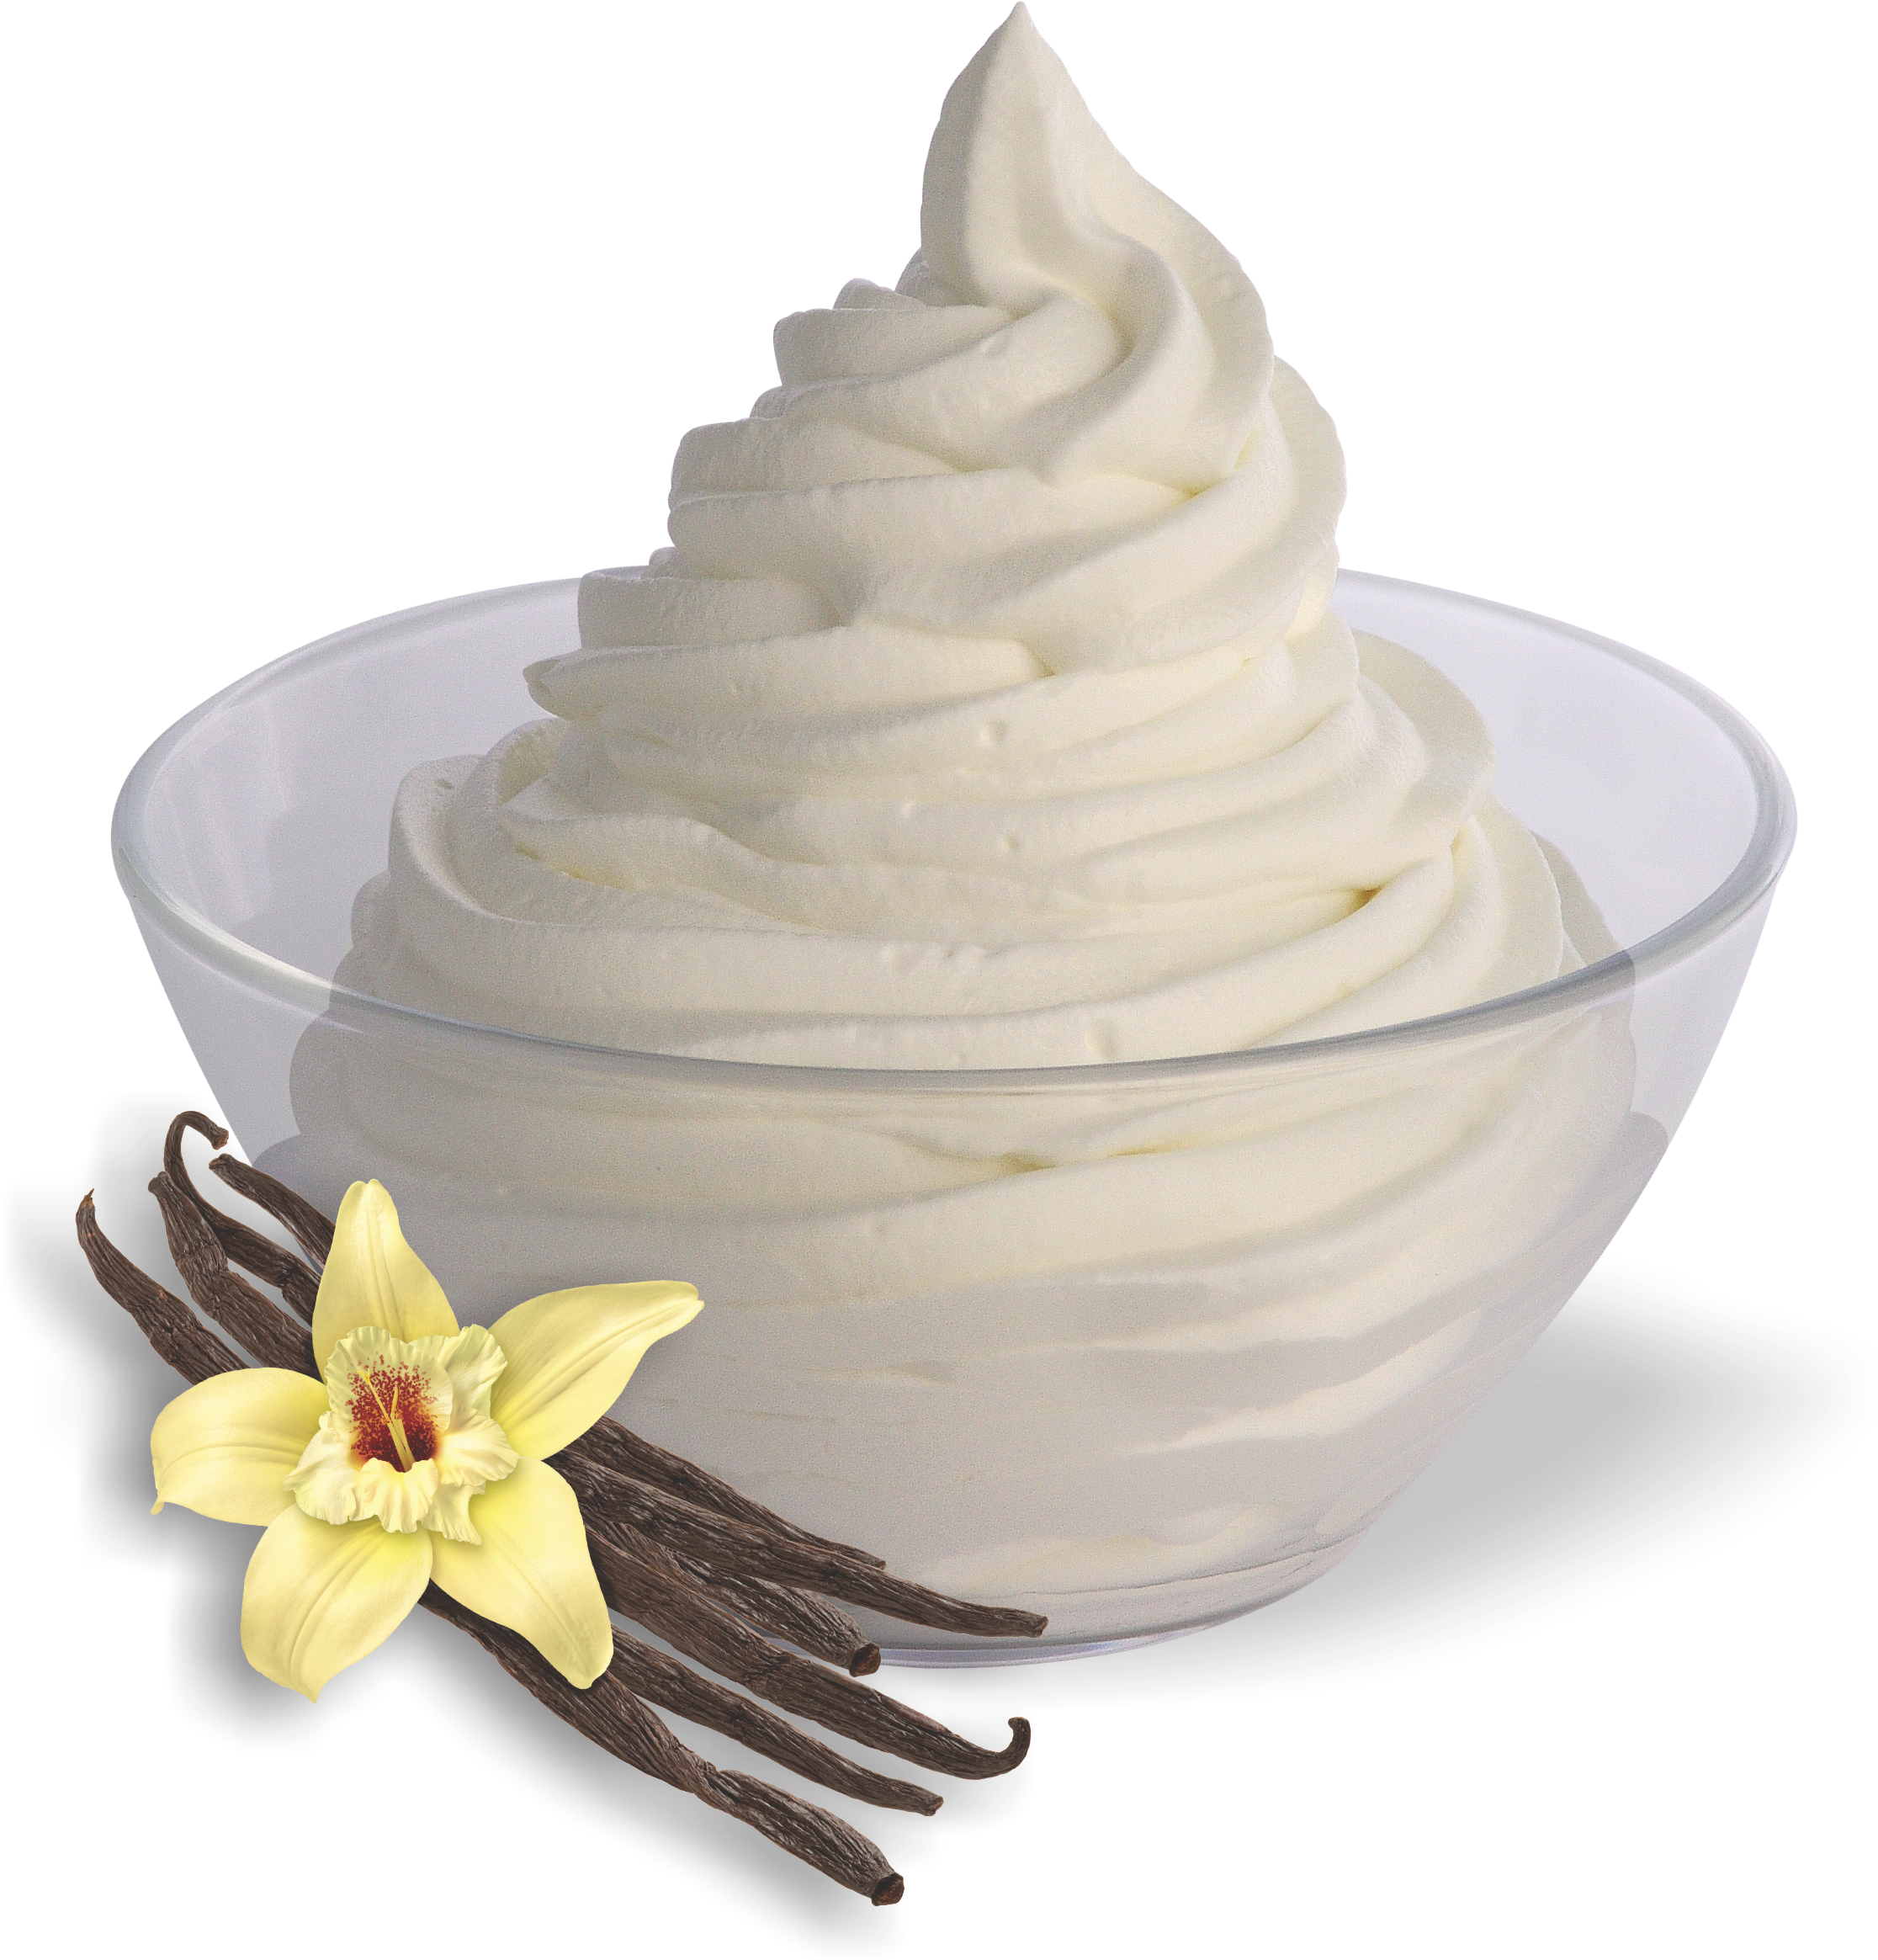 A Bowl Of Vanilla Ice Cream